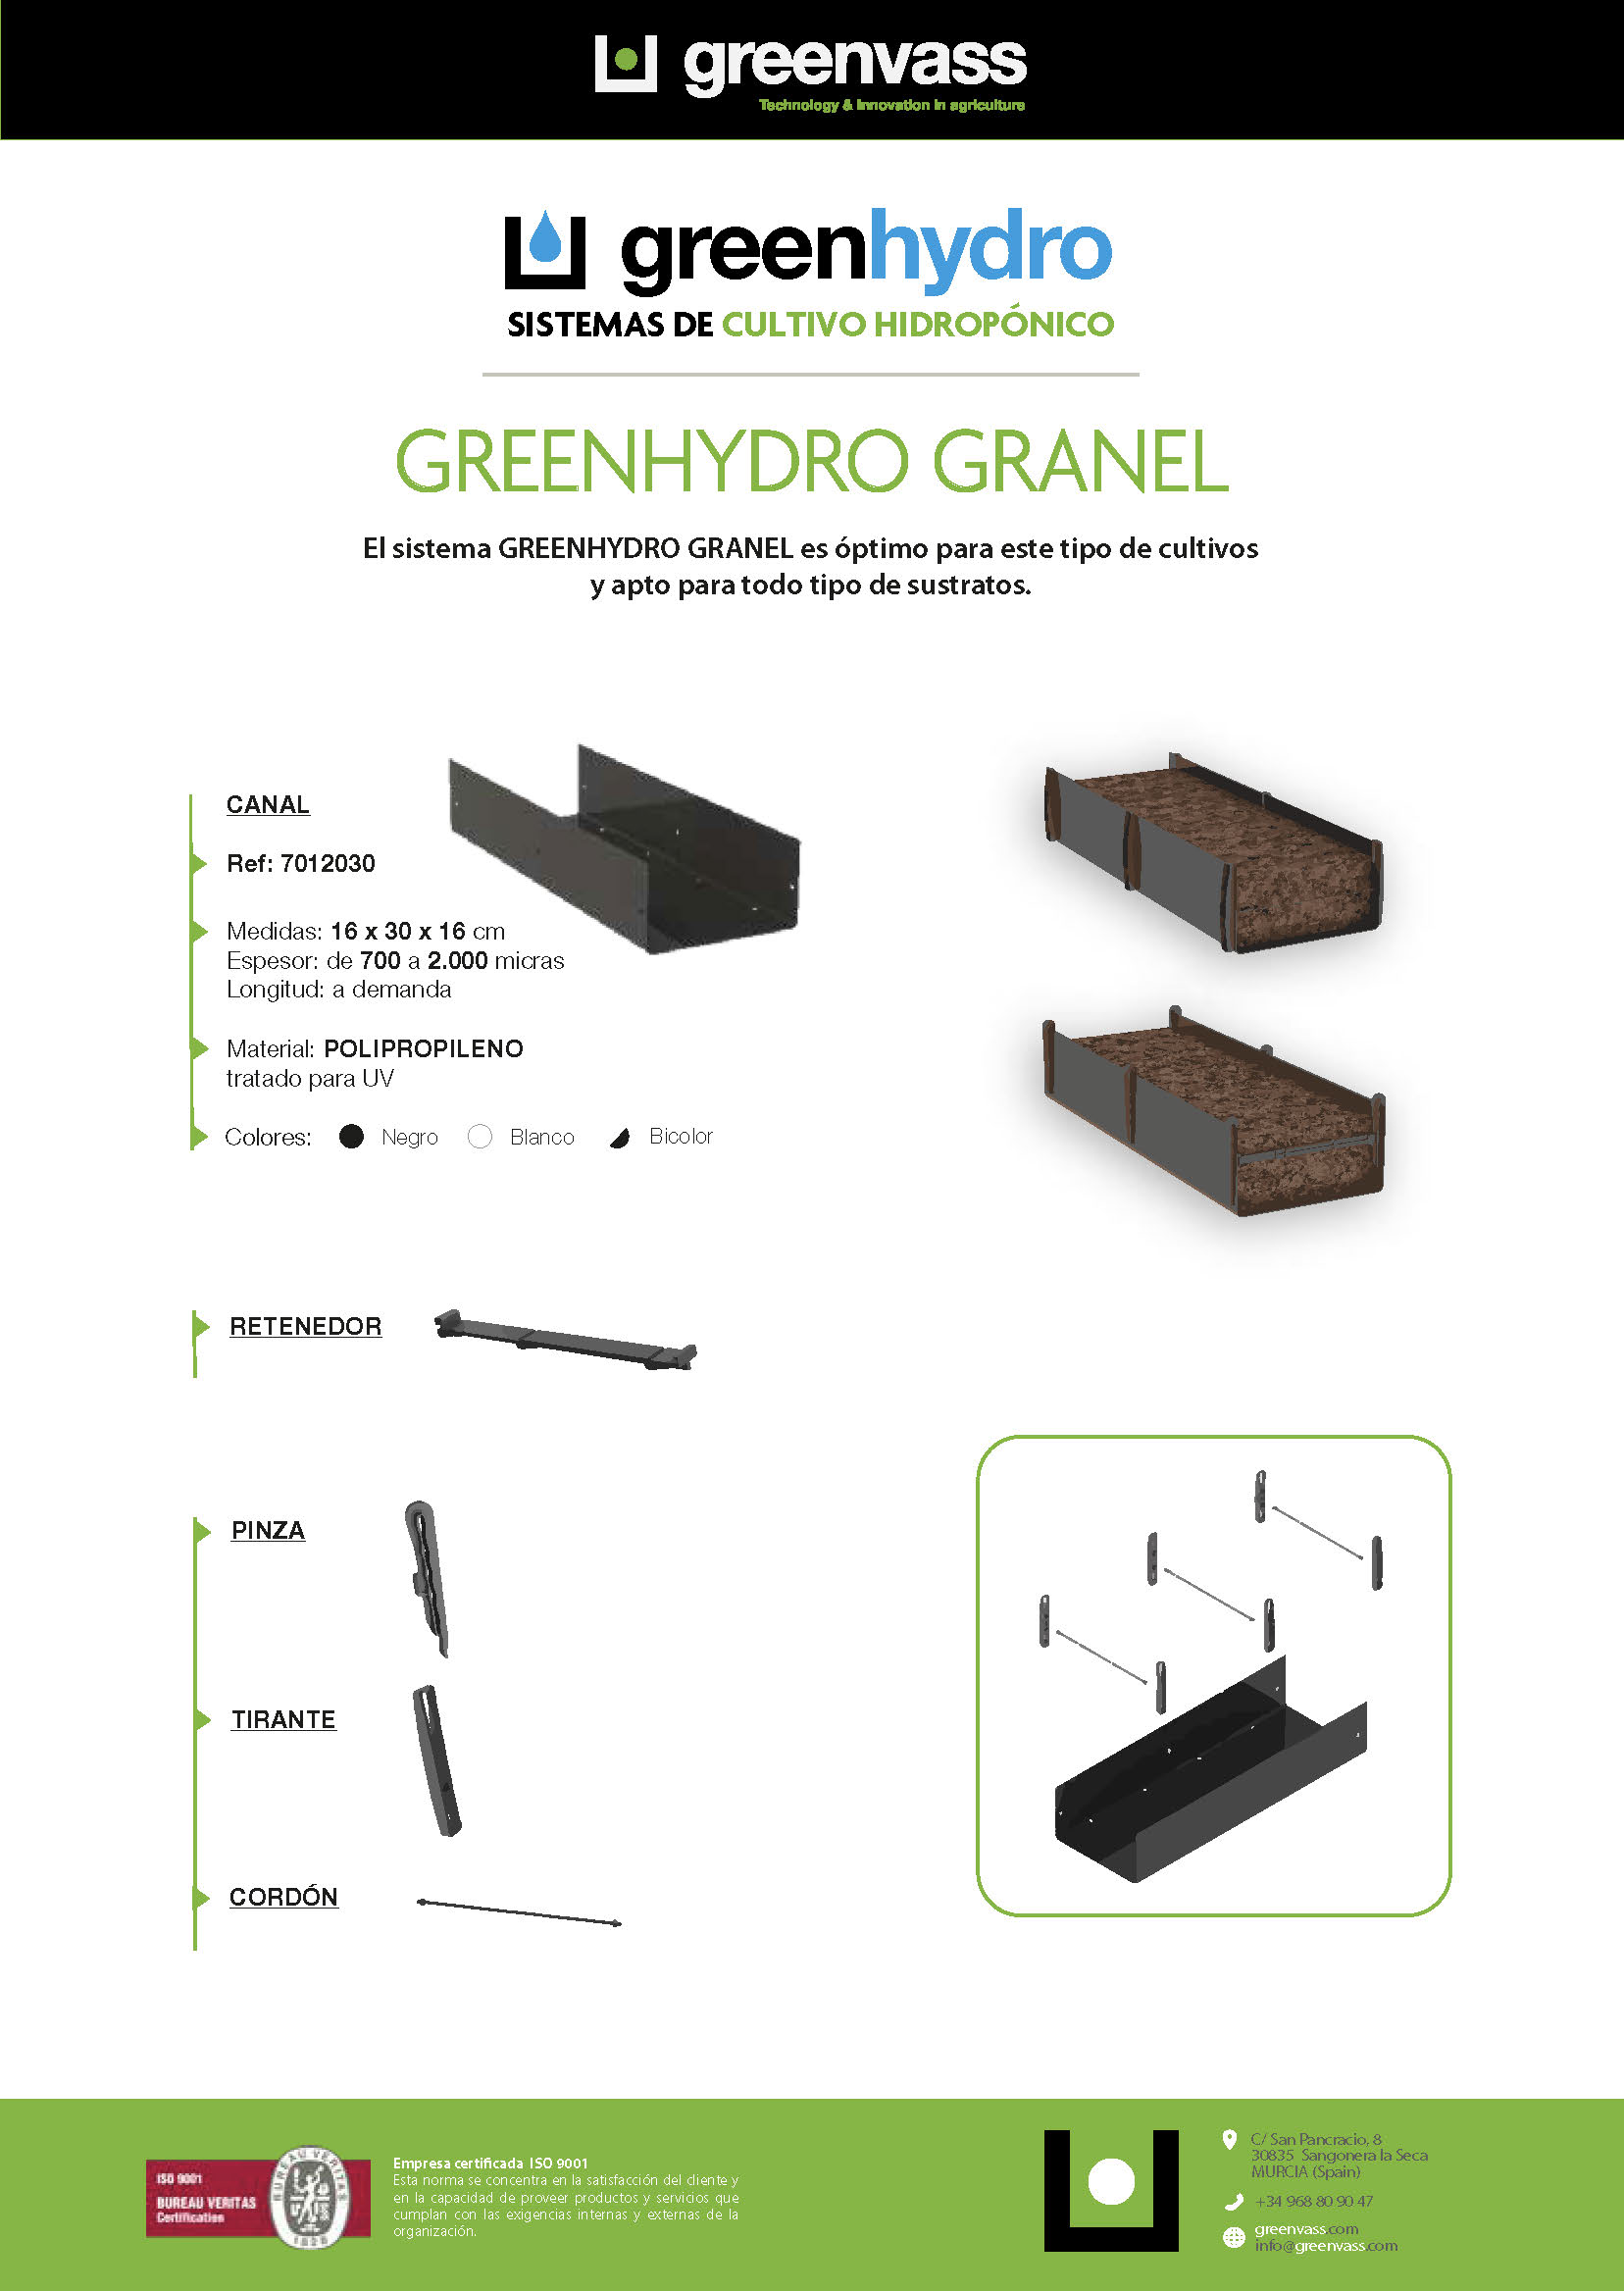 Greenhydro Granel